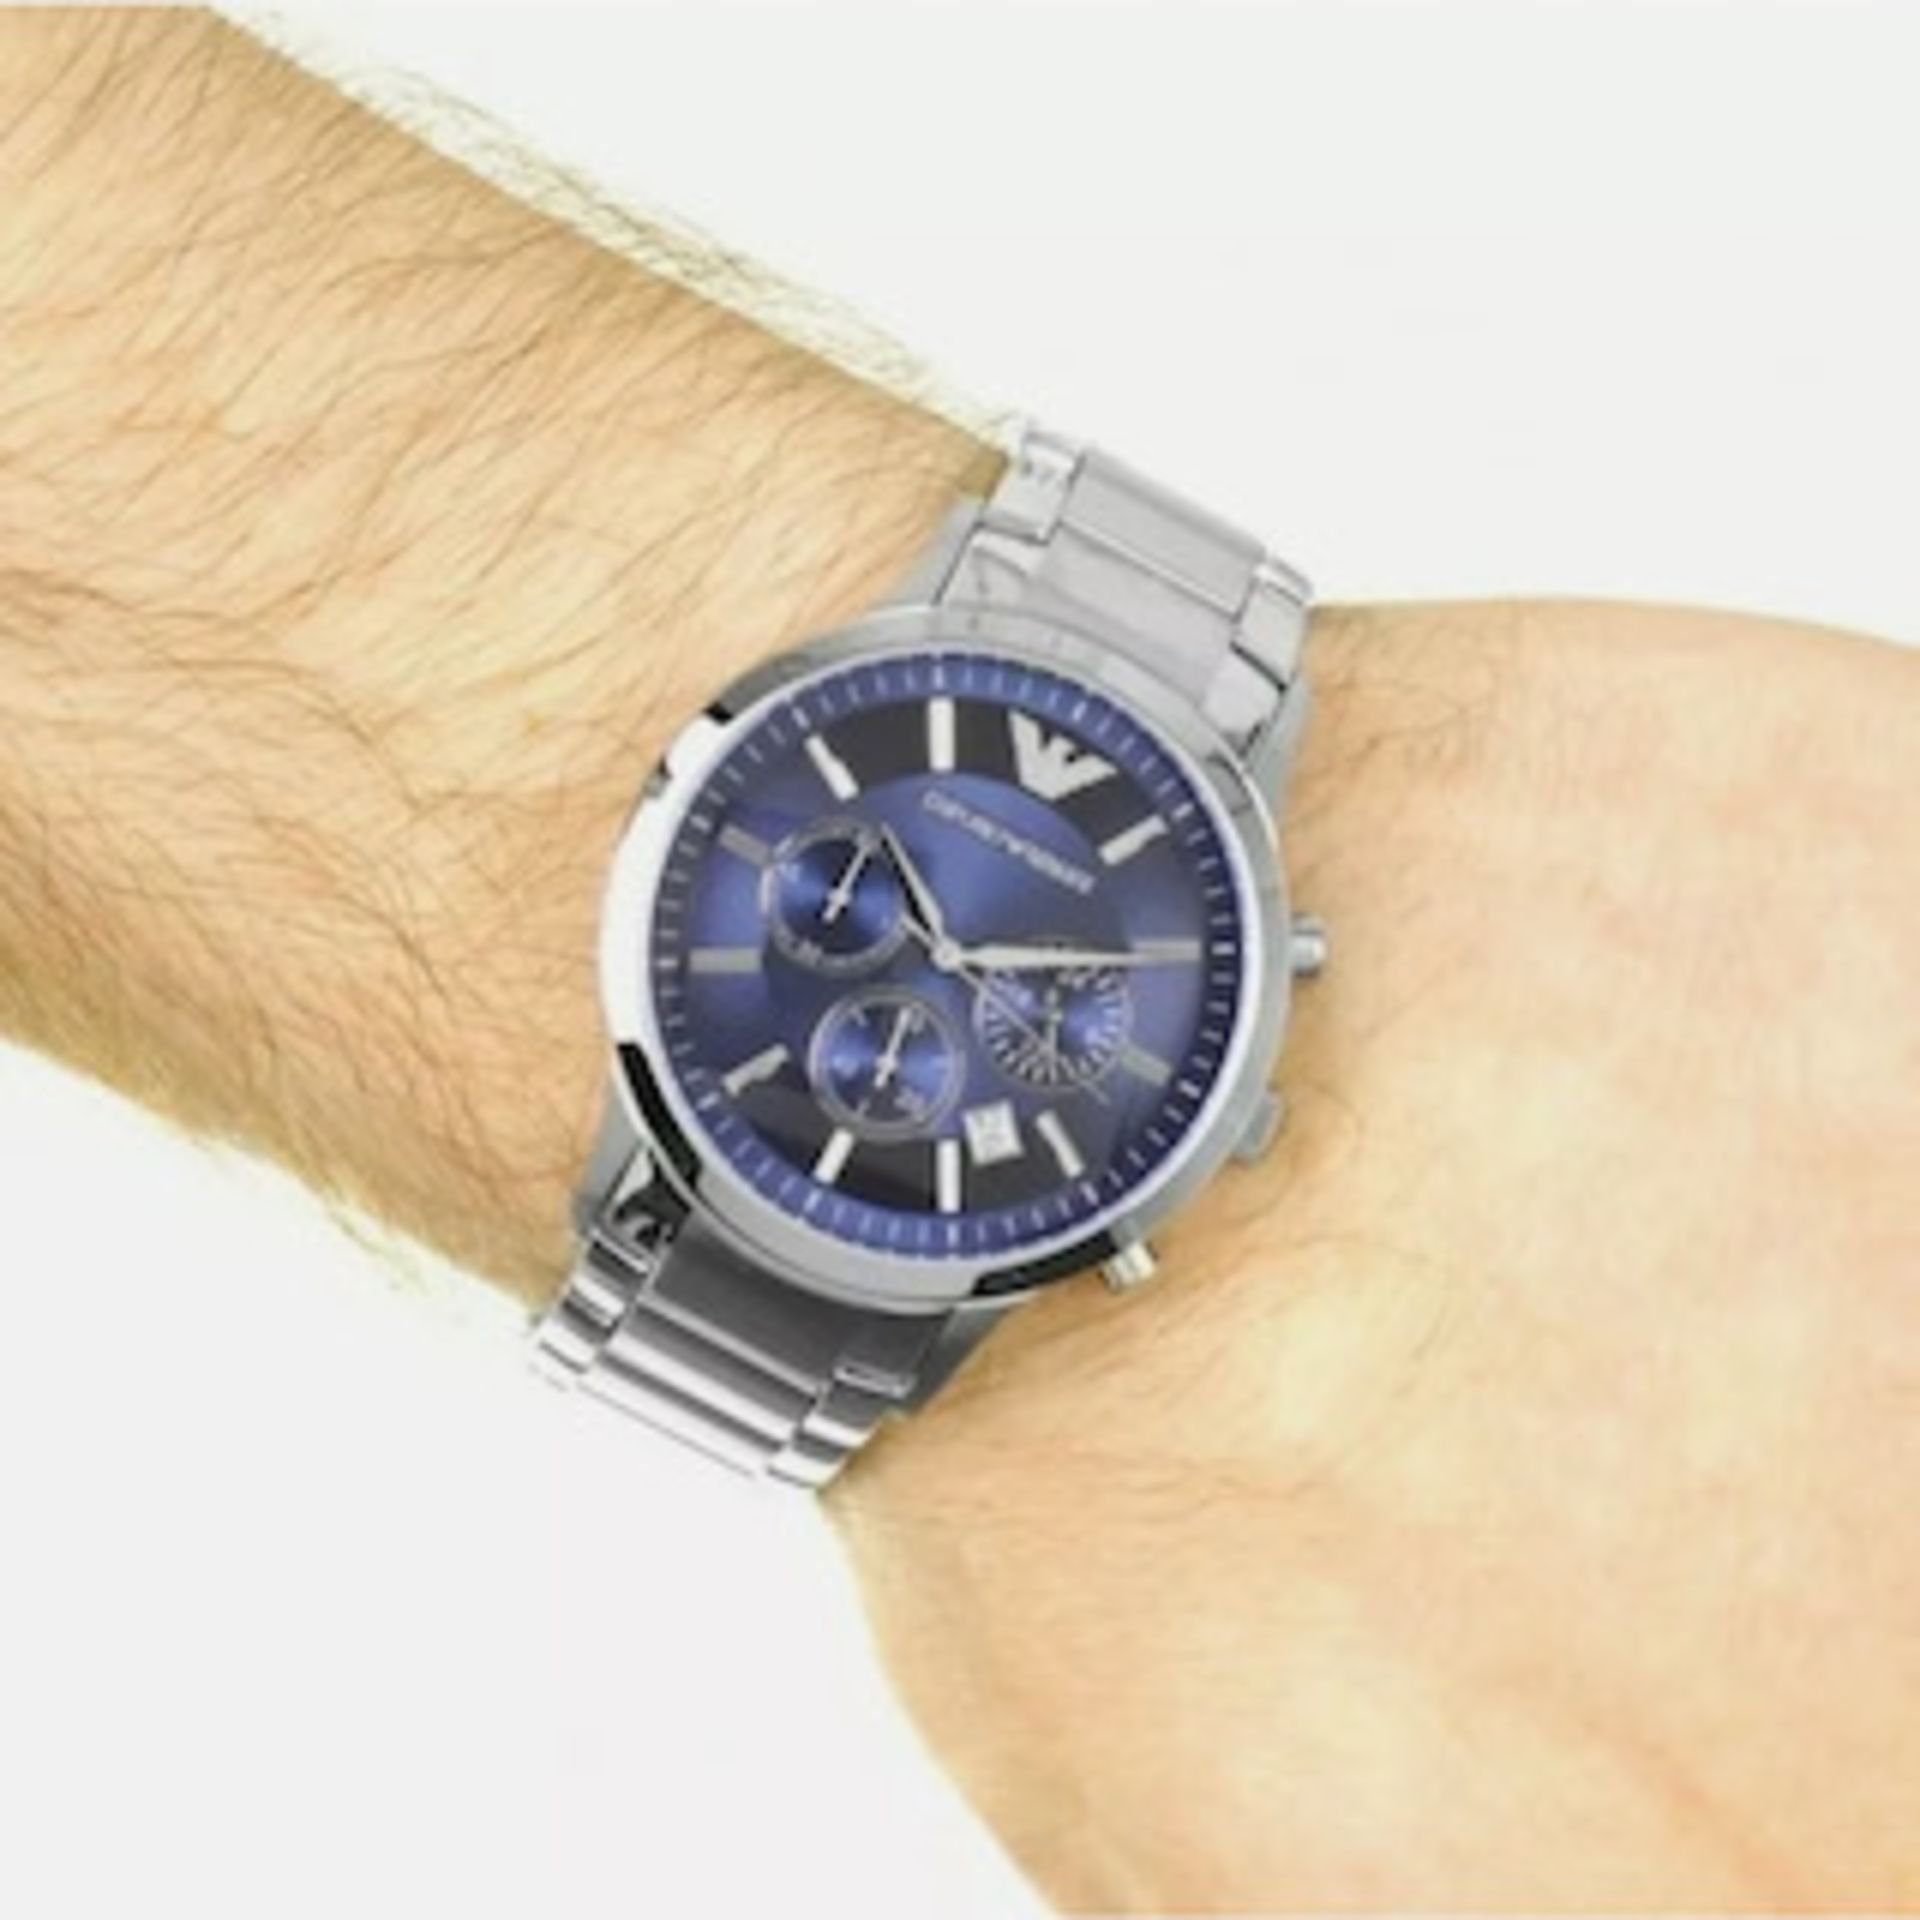 Emporio Armani AR2448 Men's Blue Dial Silver Bracelet Chronograph Watch - Image 5 of 7